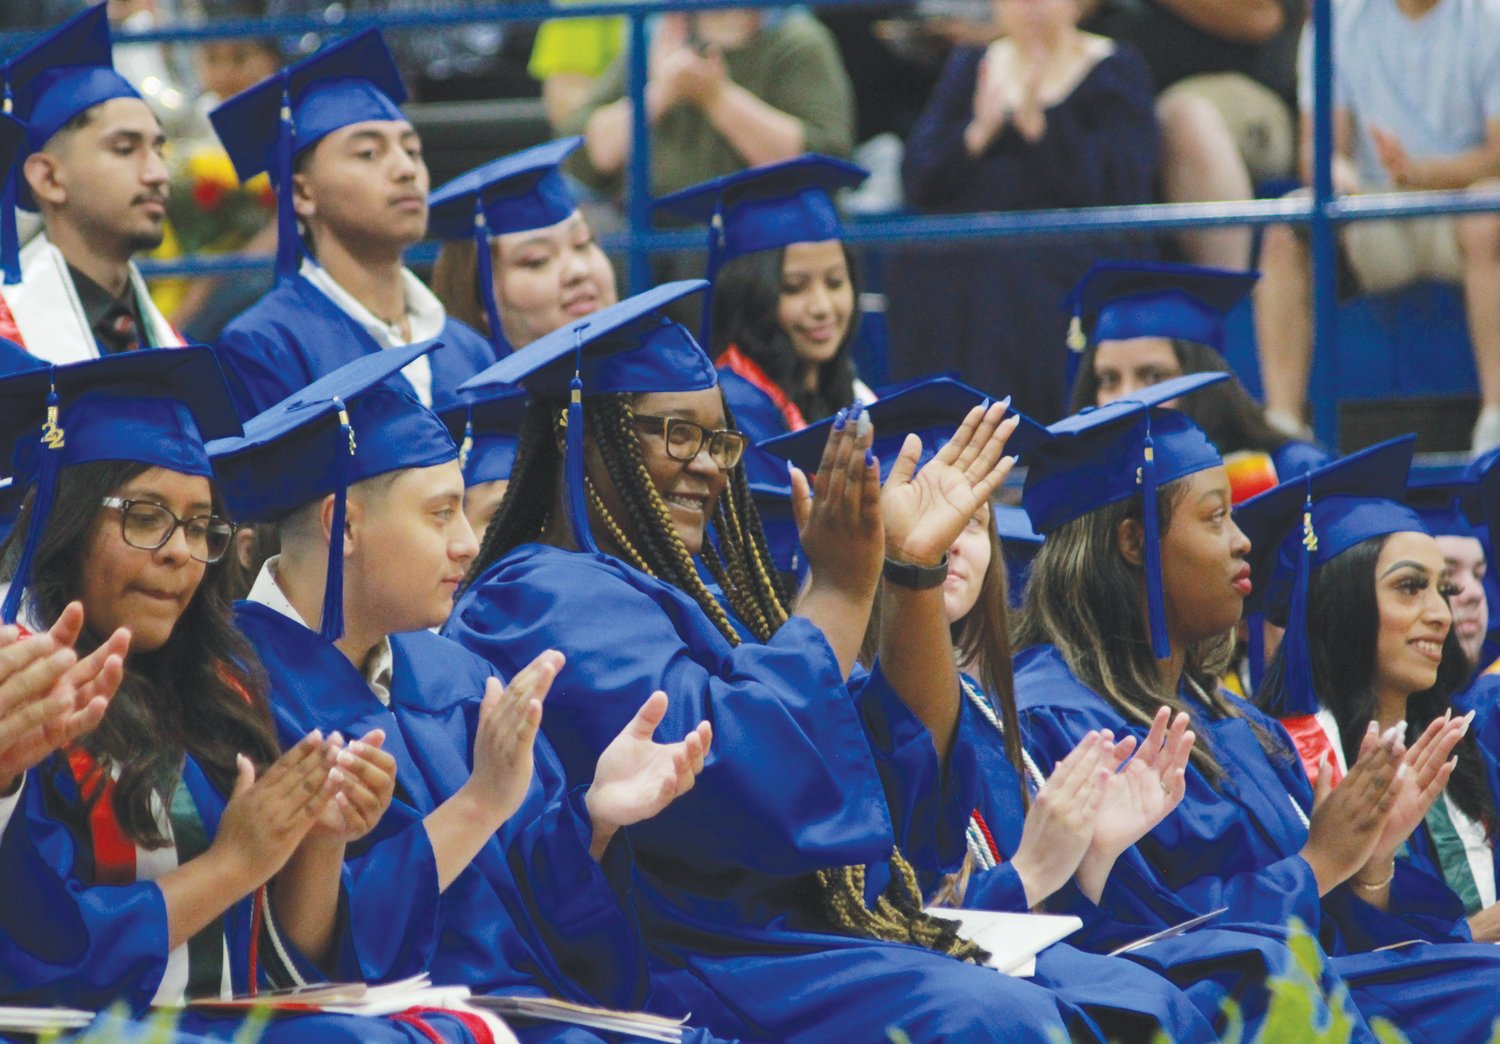 The Jordan-Matthews High School graduating class of 2022 applaud each other as they receive their diplomas on Saturday at the Jordan-Matthews High School gymnasium in Siler City.